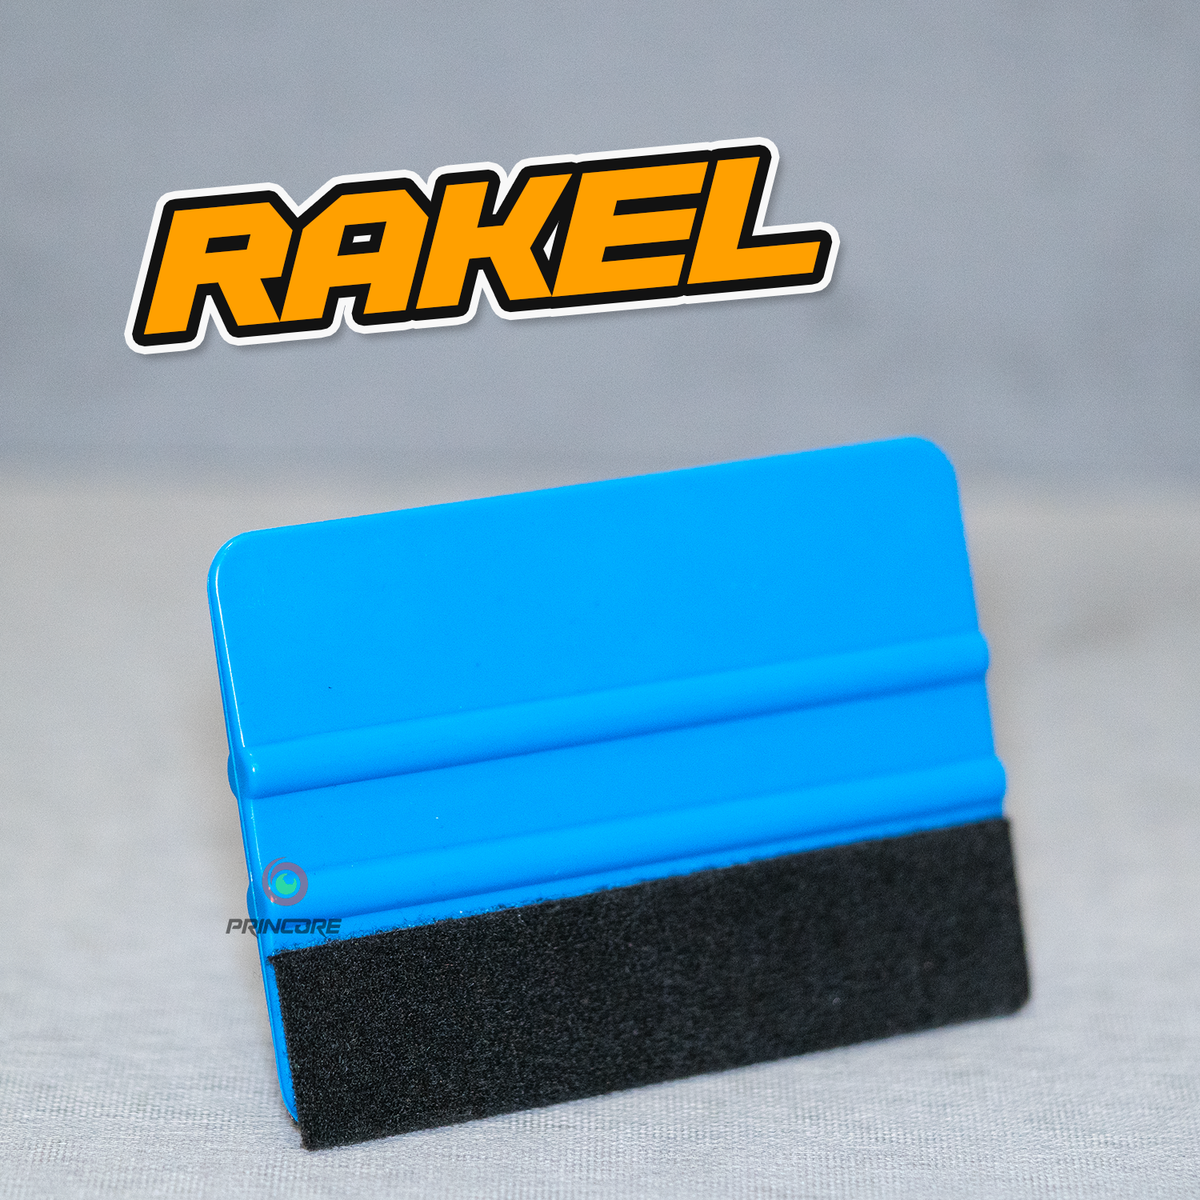 Rakel – Princore GmbH